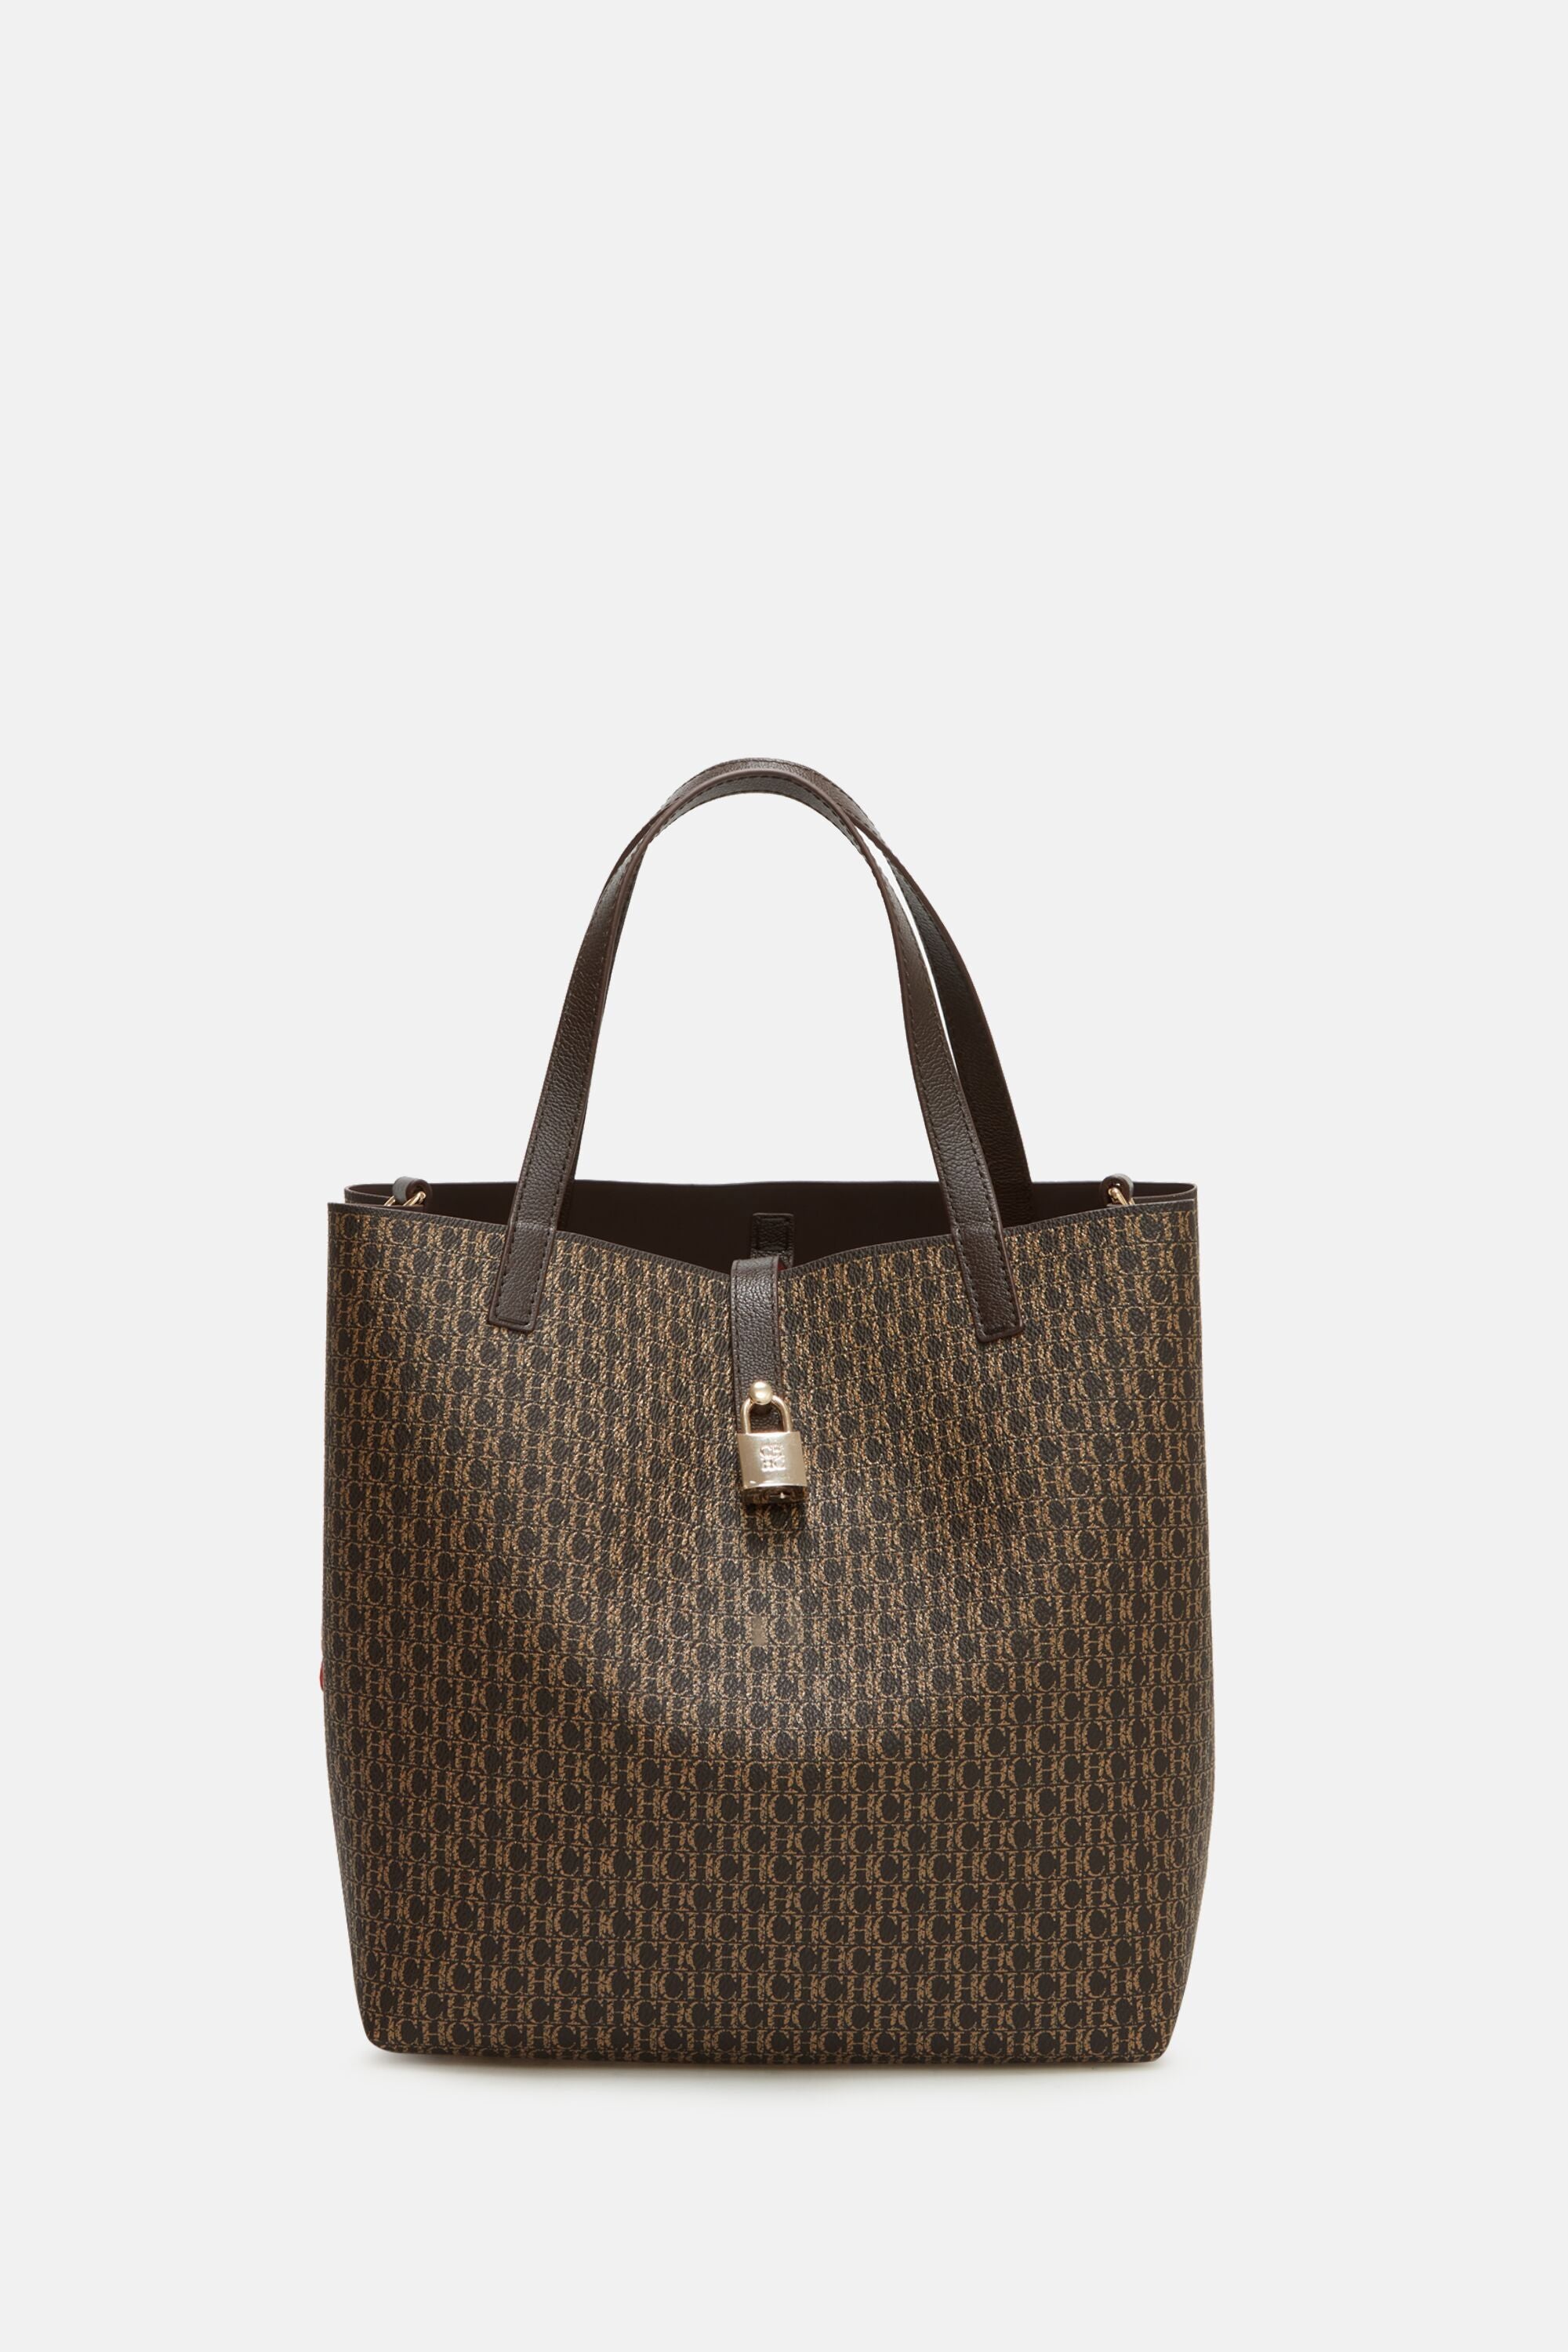 3 Handbag Brands in Dubai You Need to Know  Savoir Flair